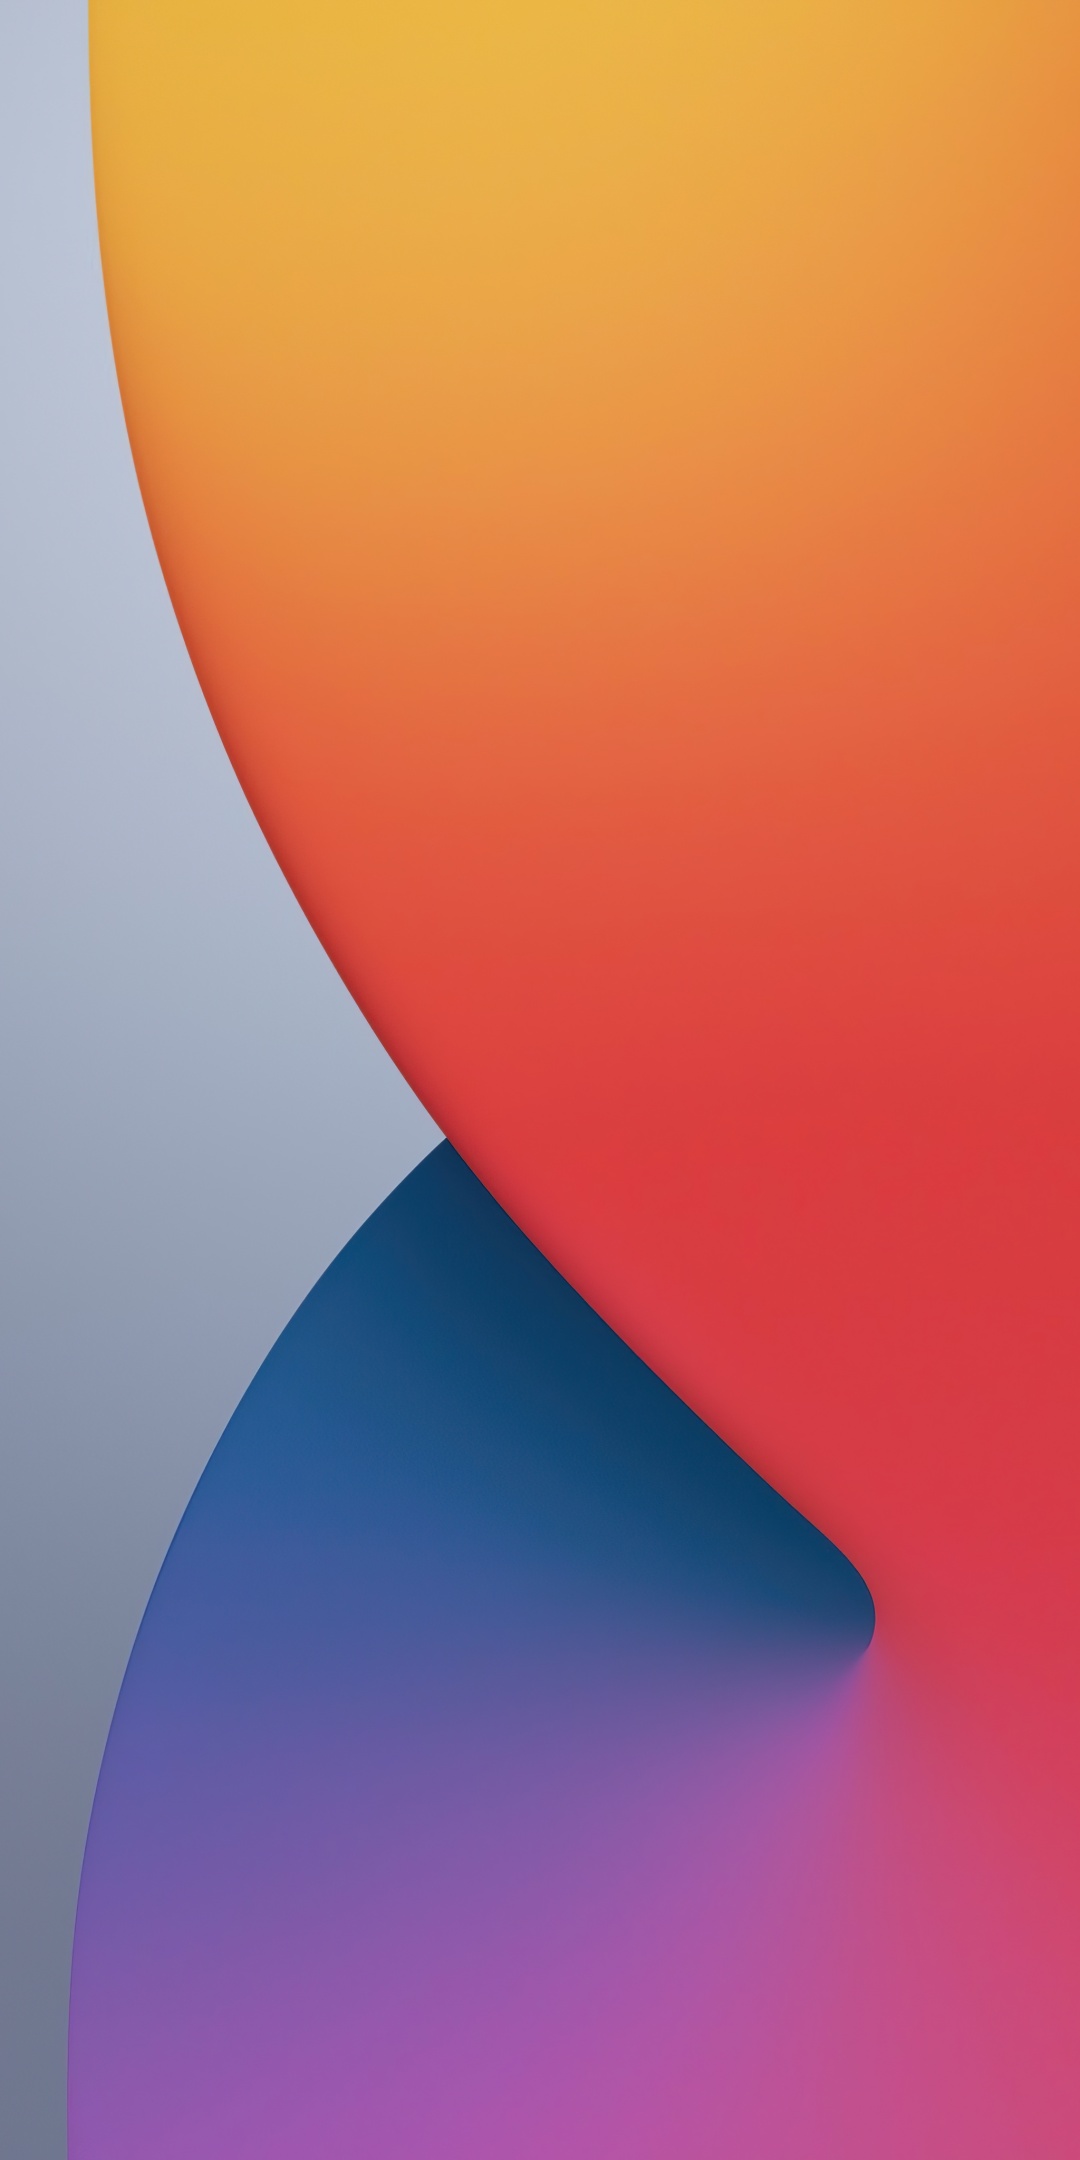 iOS 14 Wallpaper 4K, WWDC, 2020, iPhone 12, iPadOS